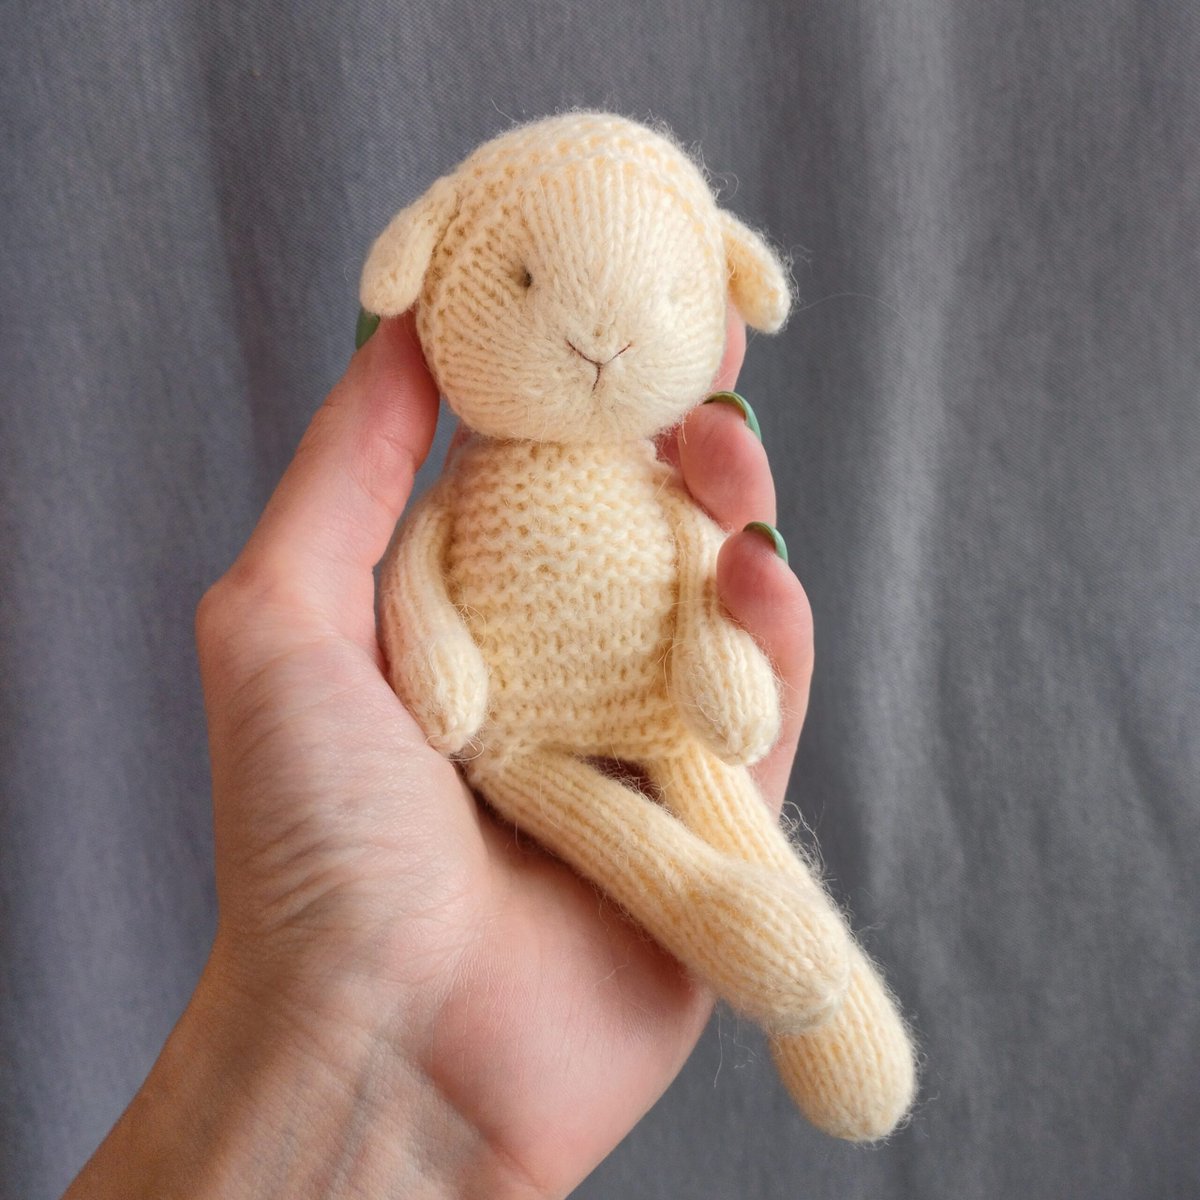 Knitted toy lamb, Toy Newborn
dailydoll.shop/shop/knitted-t…
#handmade #dailydollshop #crochettoy #crochetdoll #crochet #toys #doll #amigurumi #amigurumidolls #amigurumitoy #knitting #eastergift #birthdaygift #knittingtoys #knittingdolls #plushtoys #giftideas #newborn #lamb